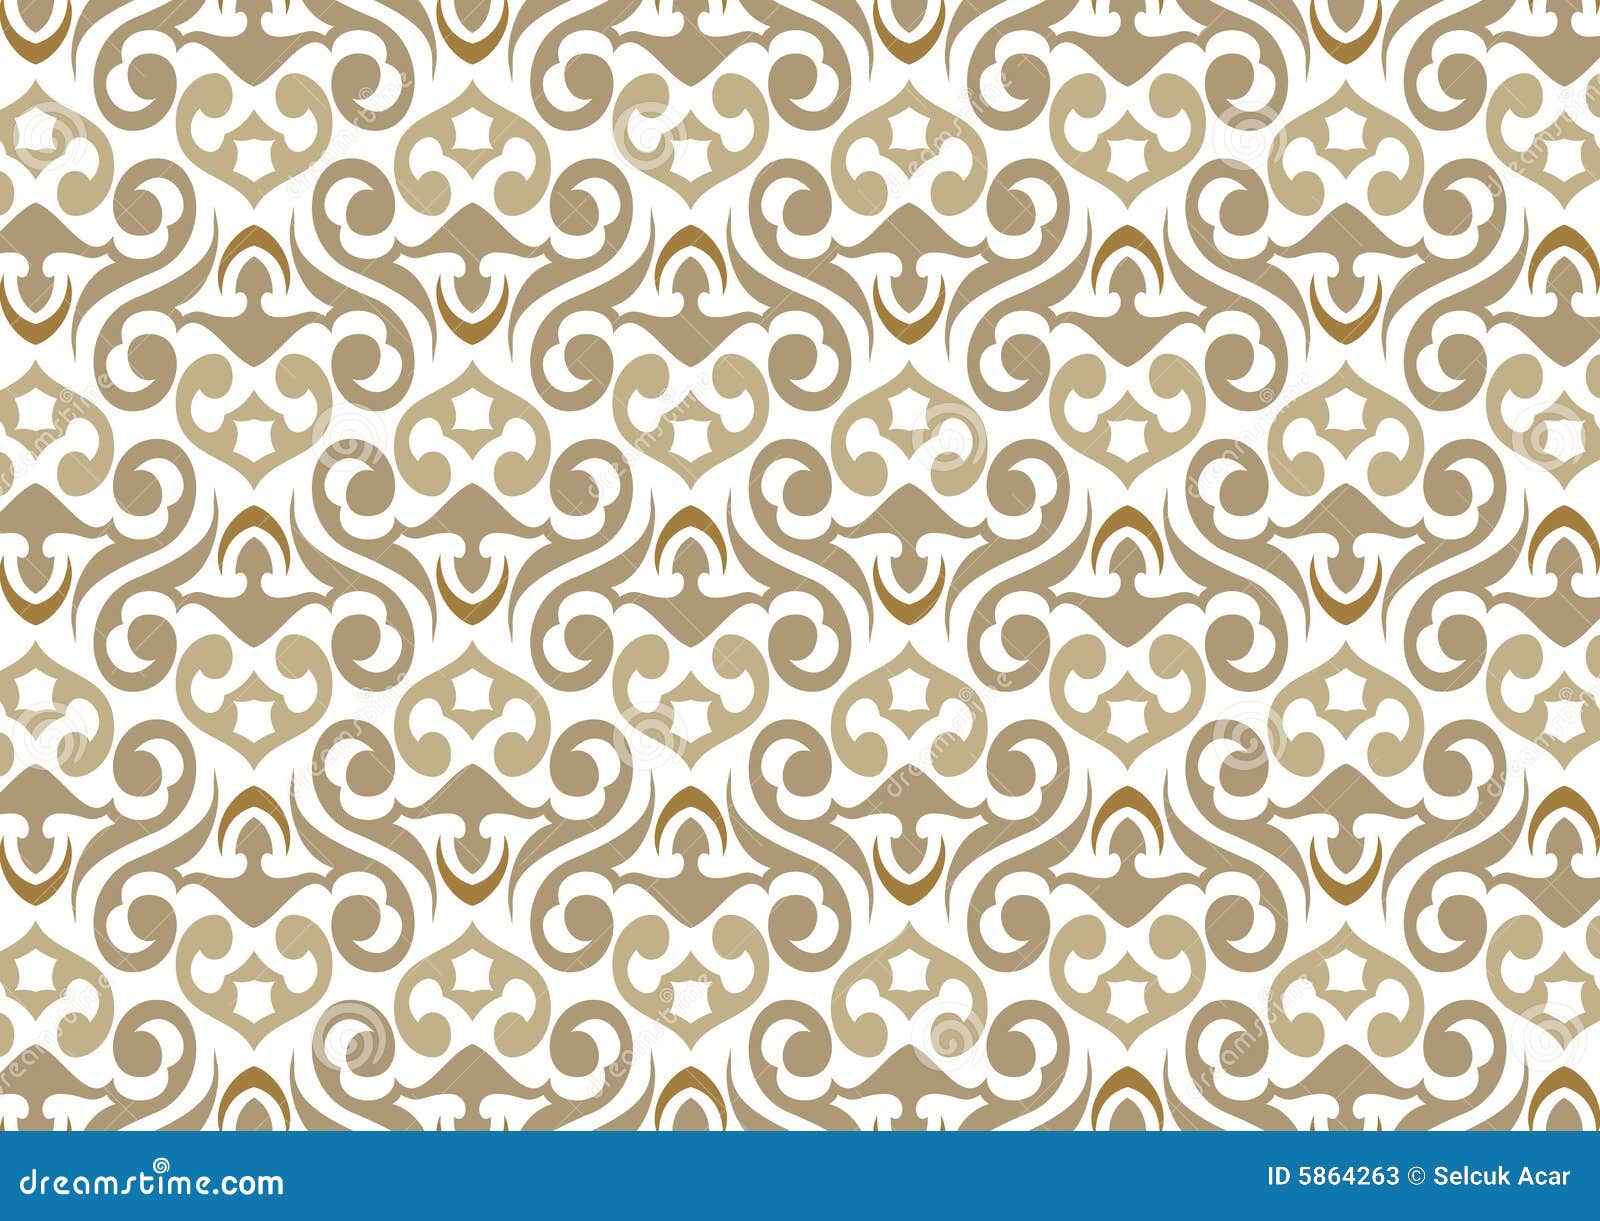 Wallpaper pattern stock vector. Illustration of curl, seamless - 5864263